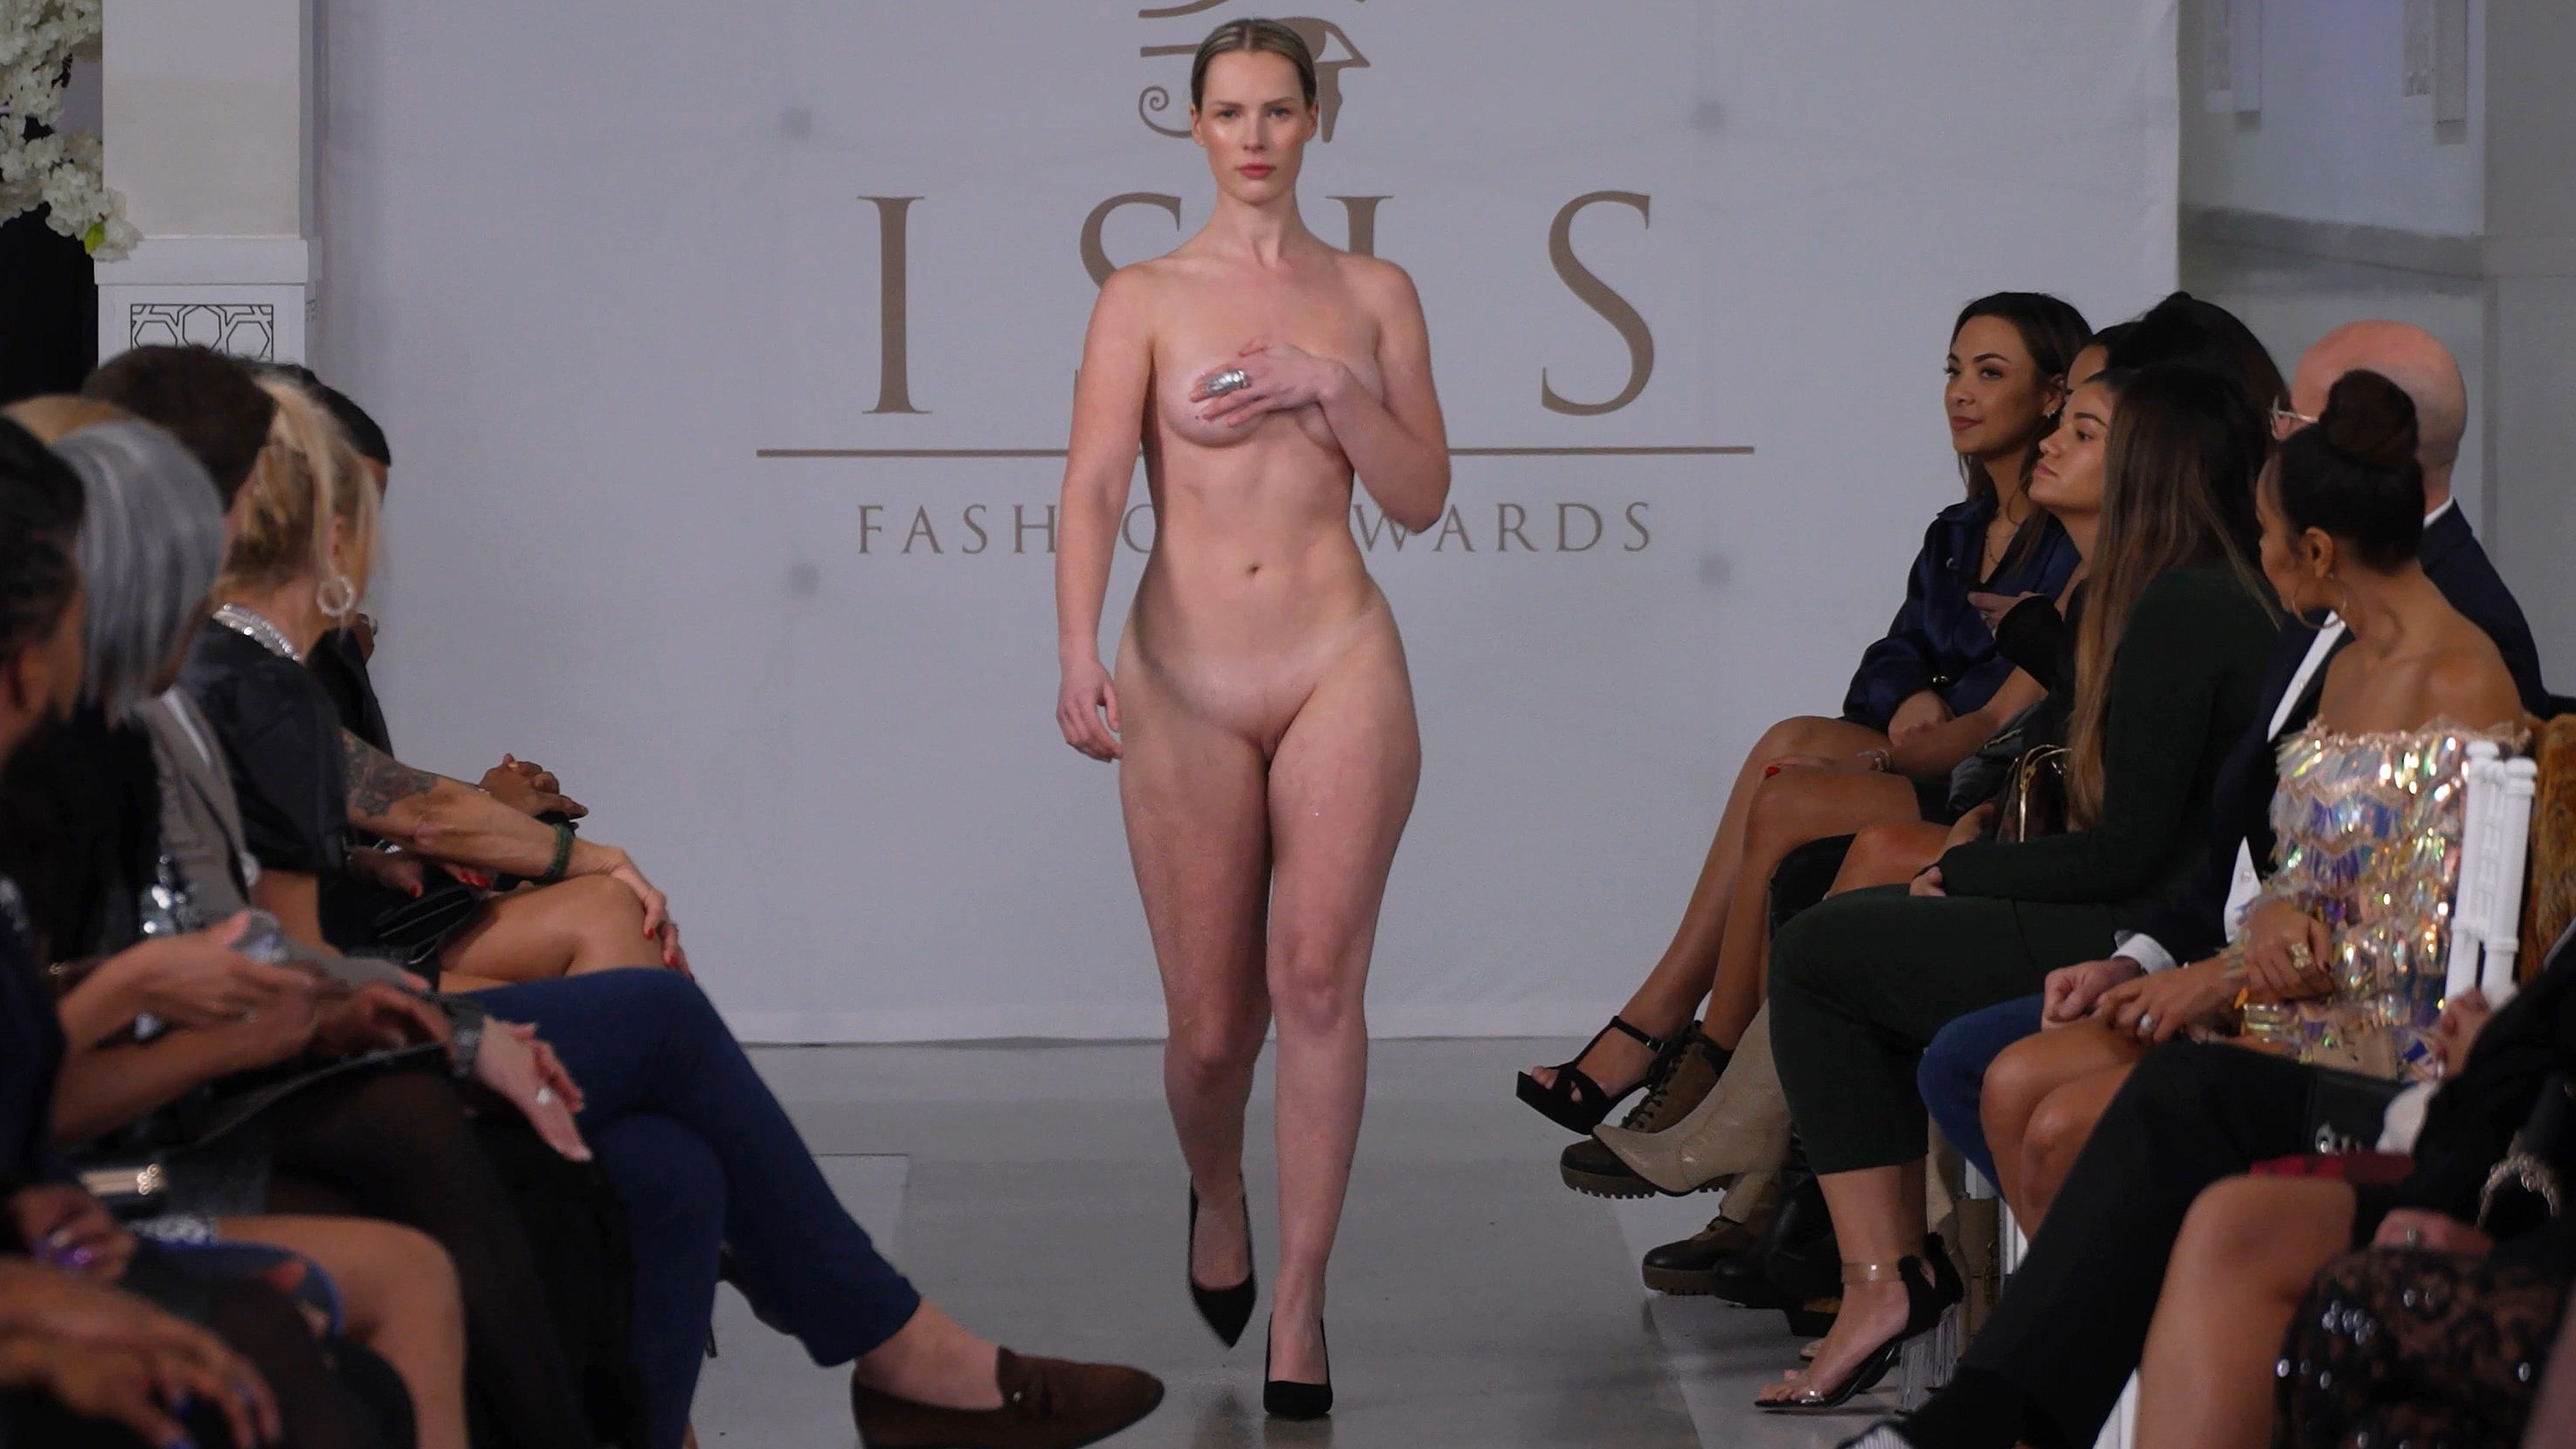 Nude Models Fashion Show - Isis Fashion Awards - TV pic